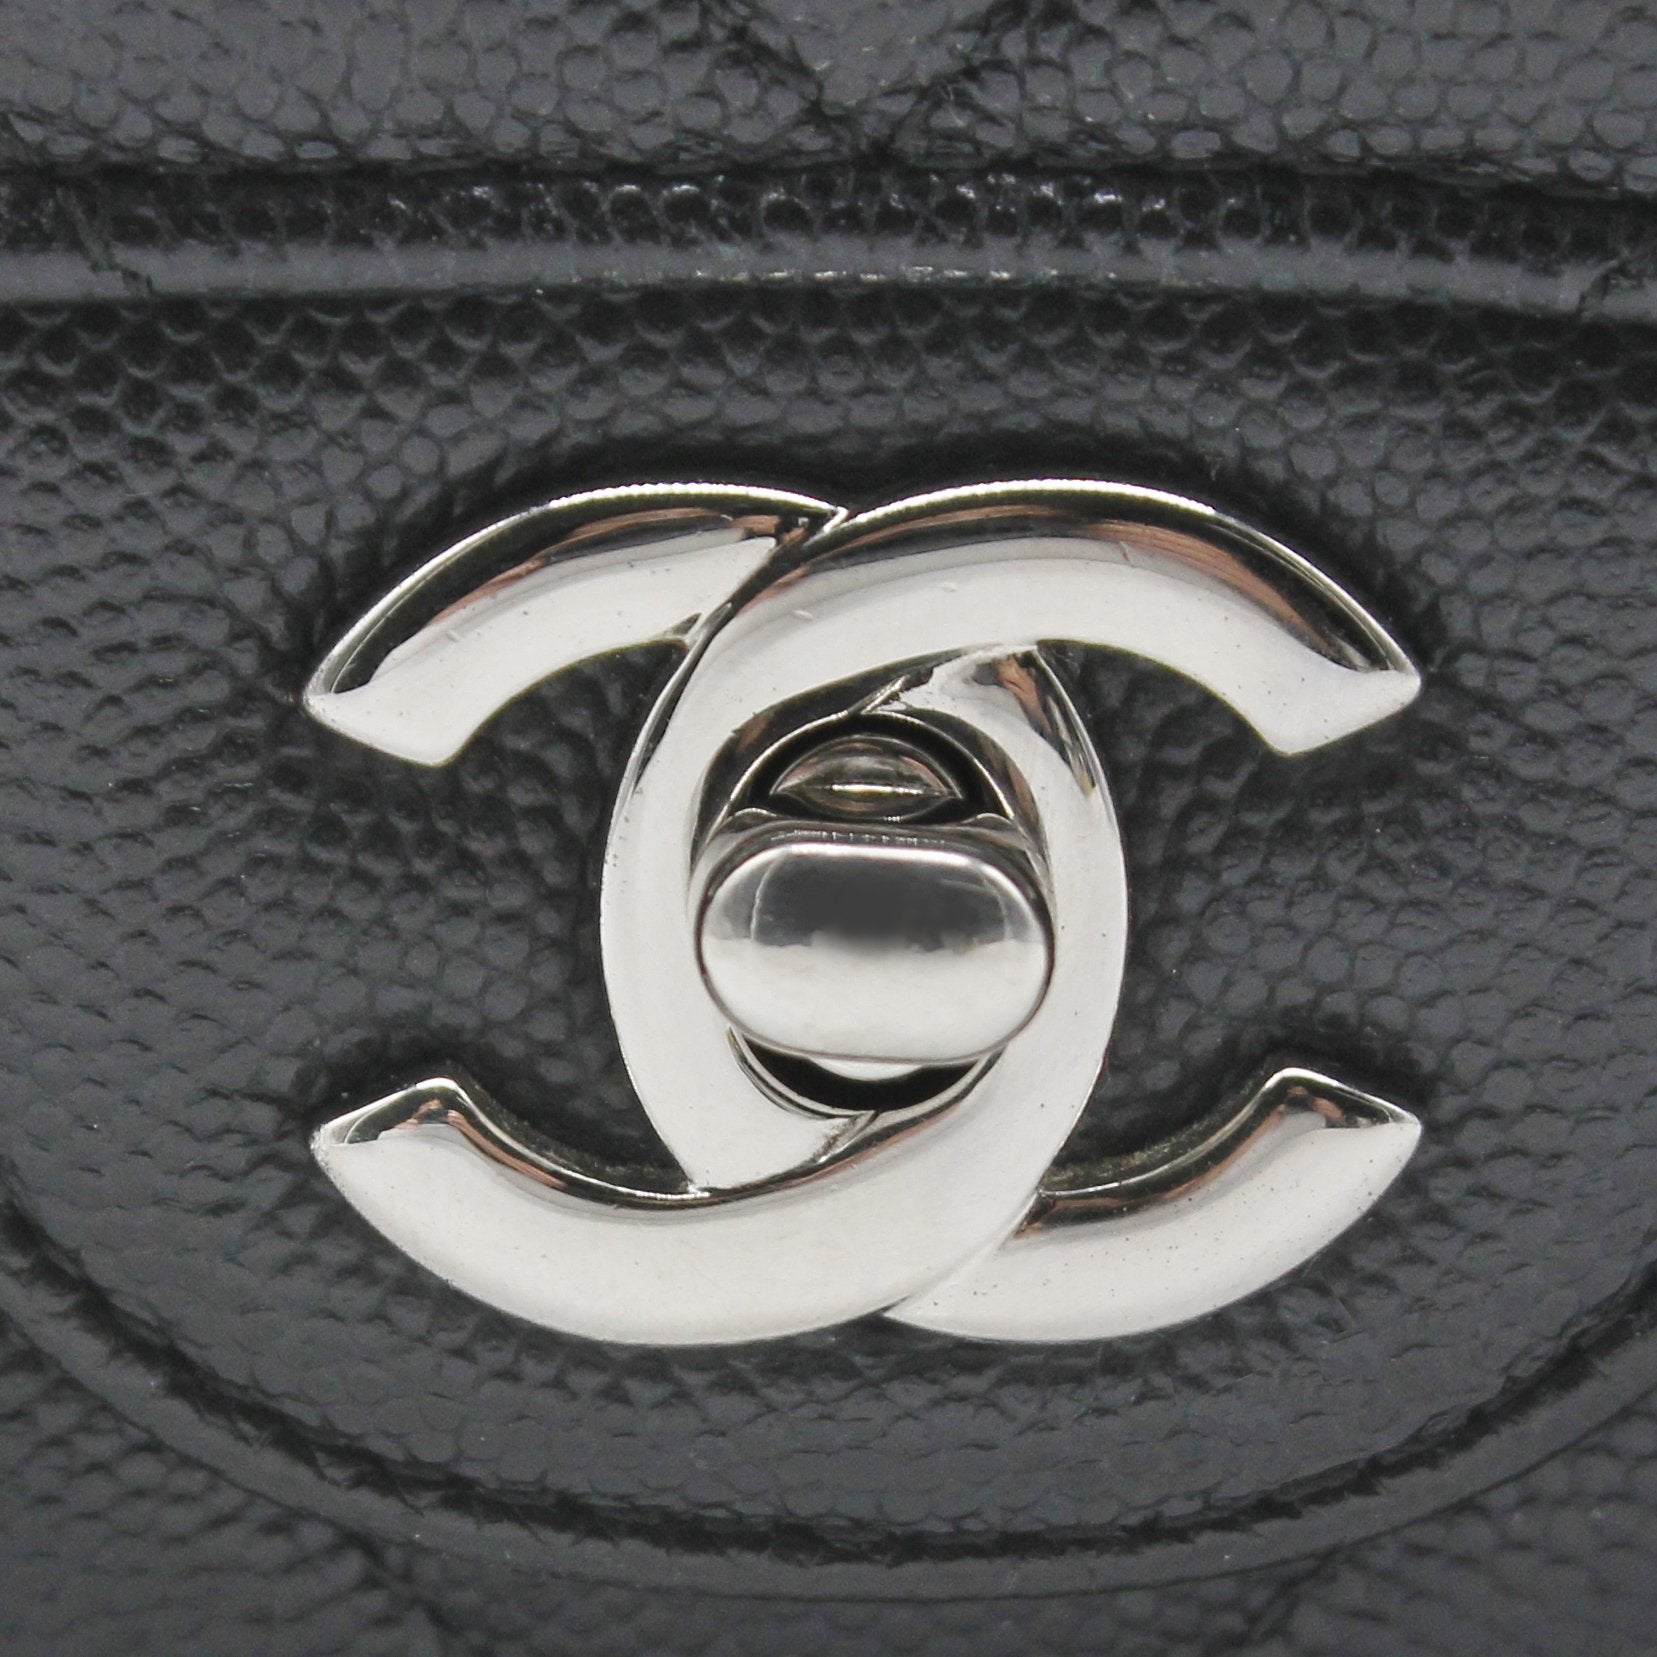 Chanel Chevron Flap - 93 For Sale on 1stDibs  chanel chevron bag, chanel  chevron medal flap bag, chanel classic flap chevron